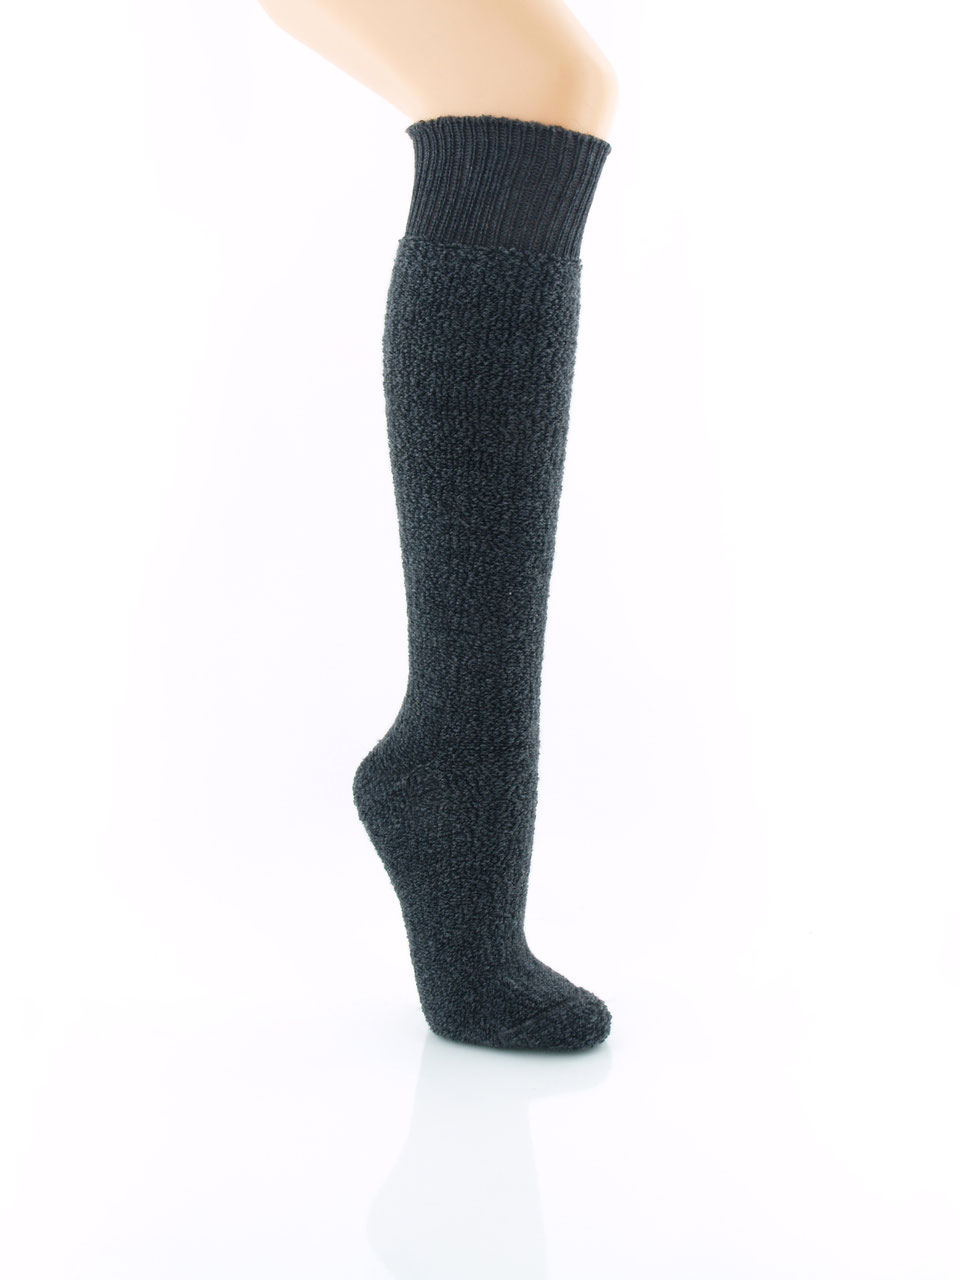 OVP o 35-38 NEU 2 Paar kuschlig warme Thermo Socken Skisocken Kniestrümpfe Gr 